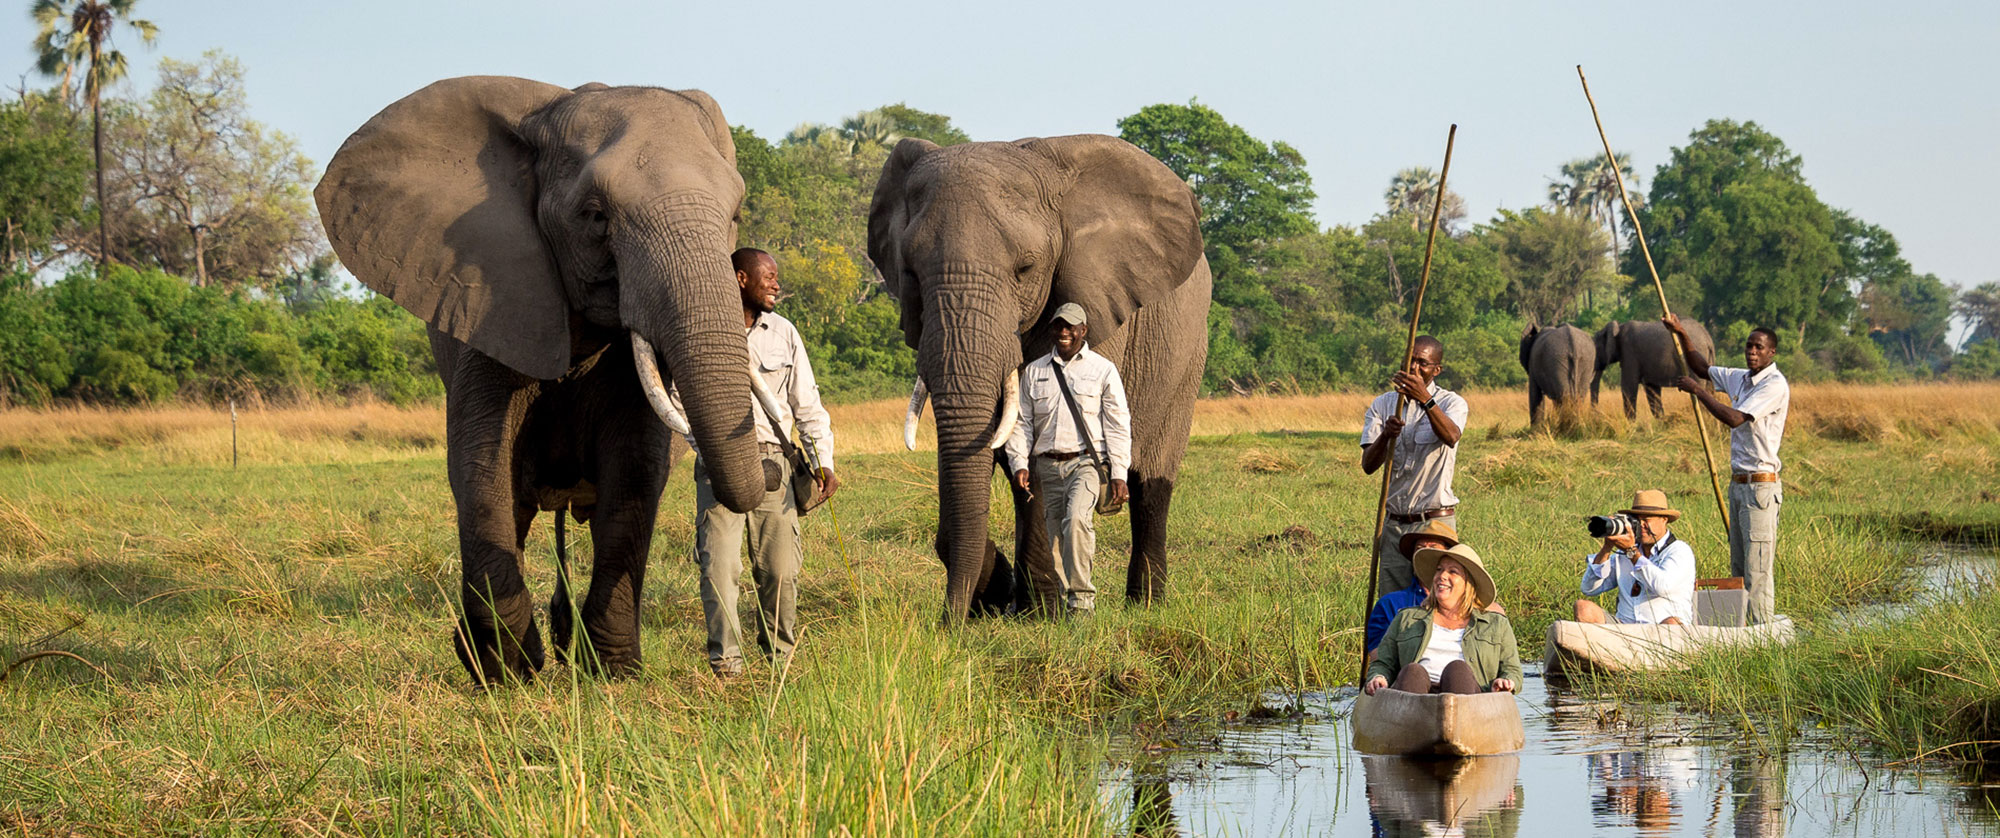 Elephants at Okavango Delta